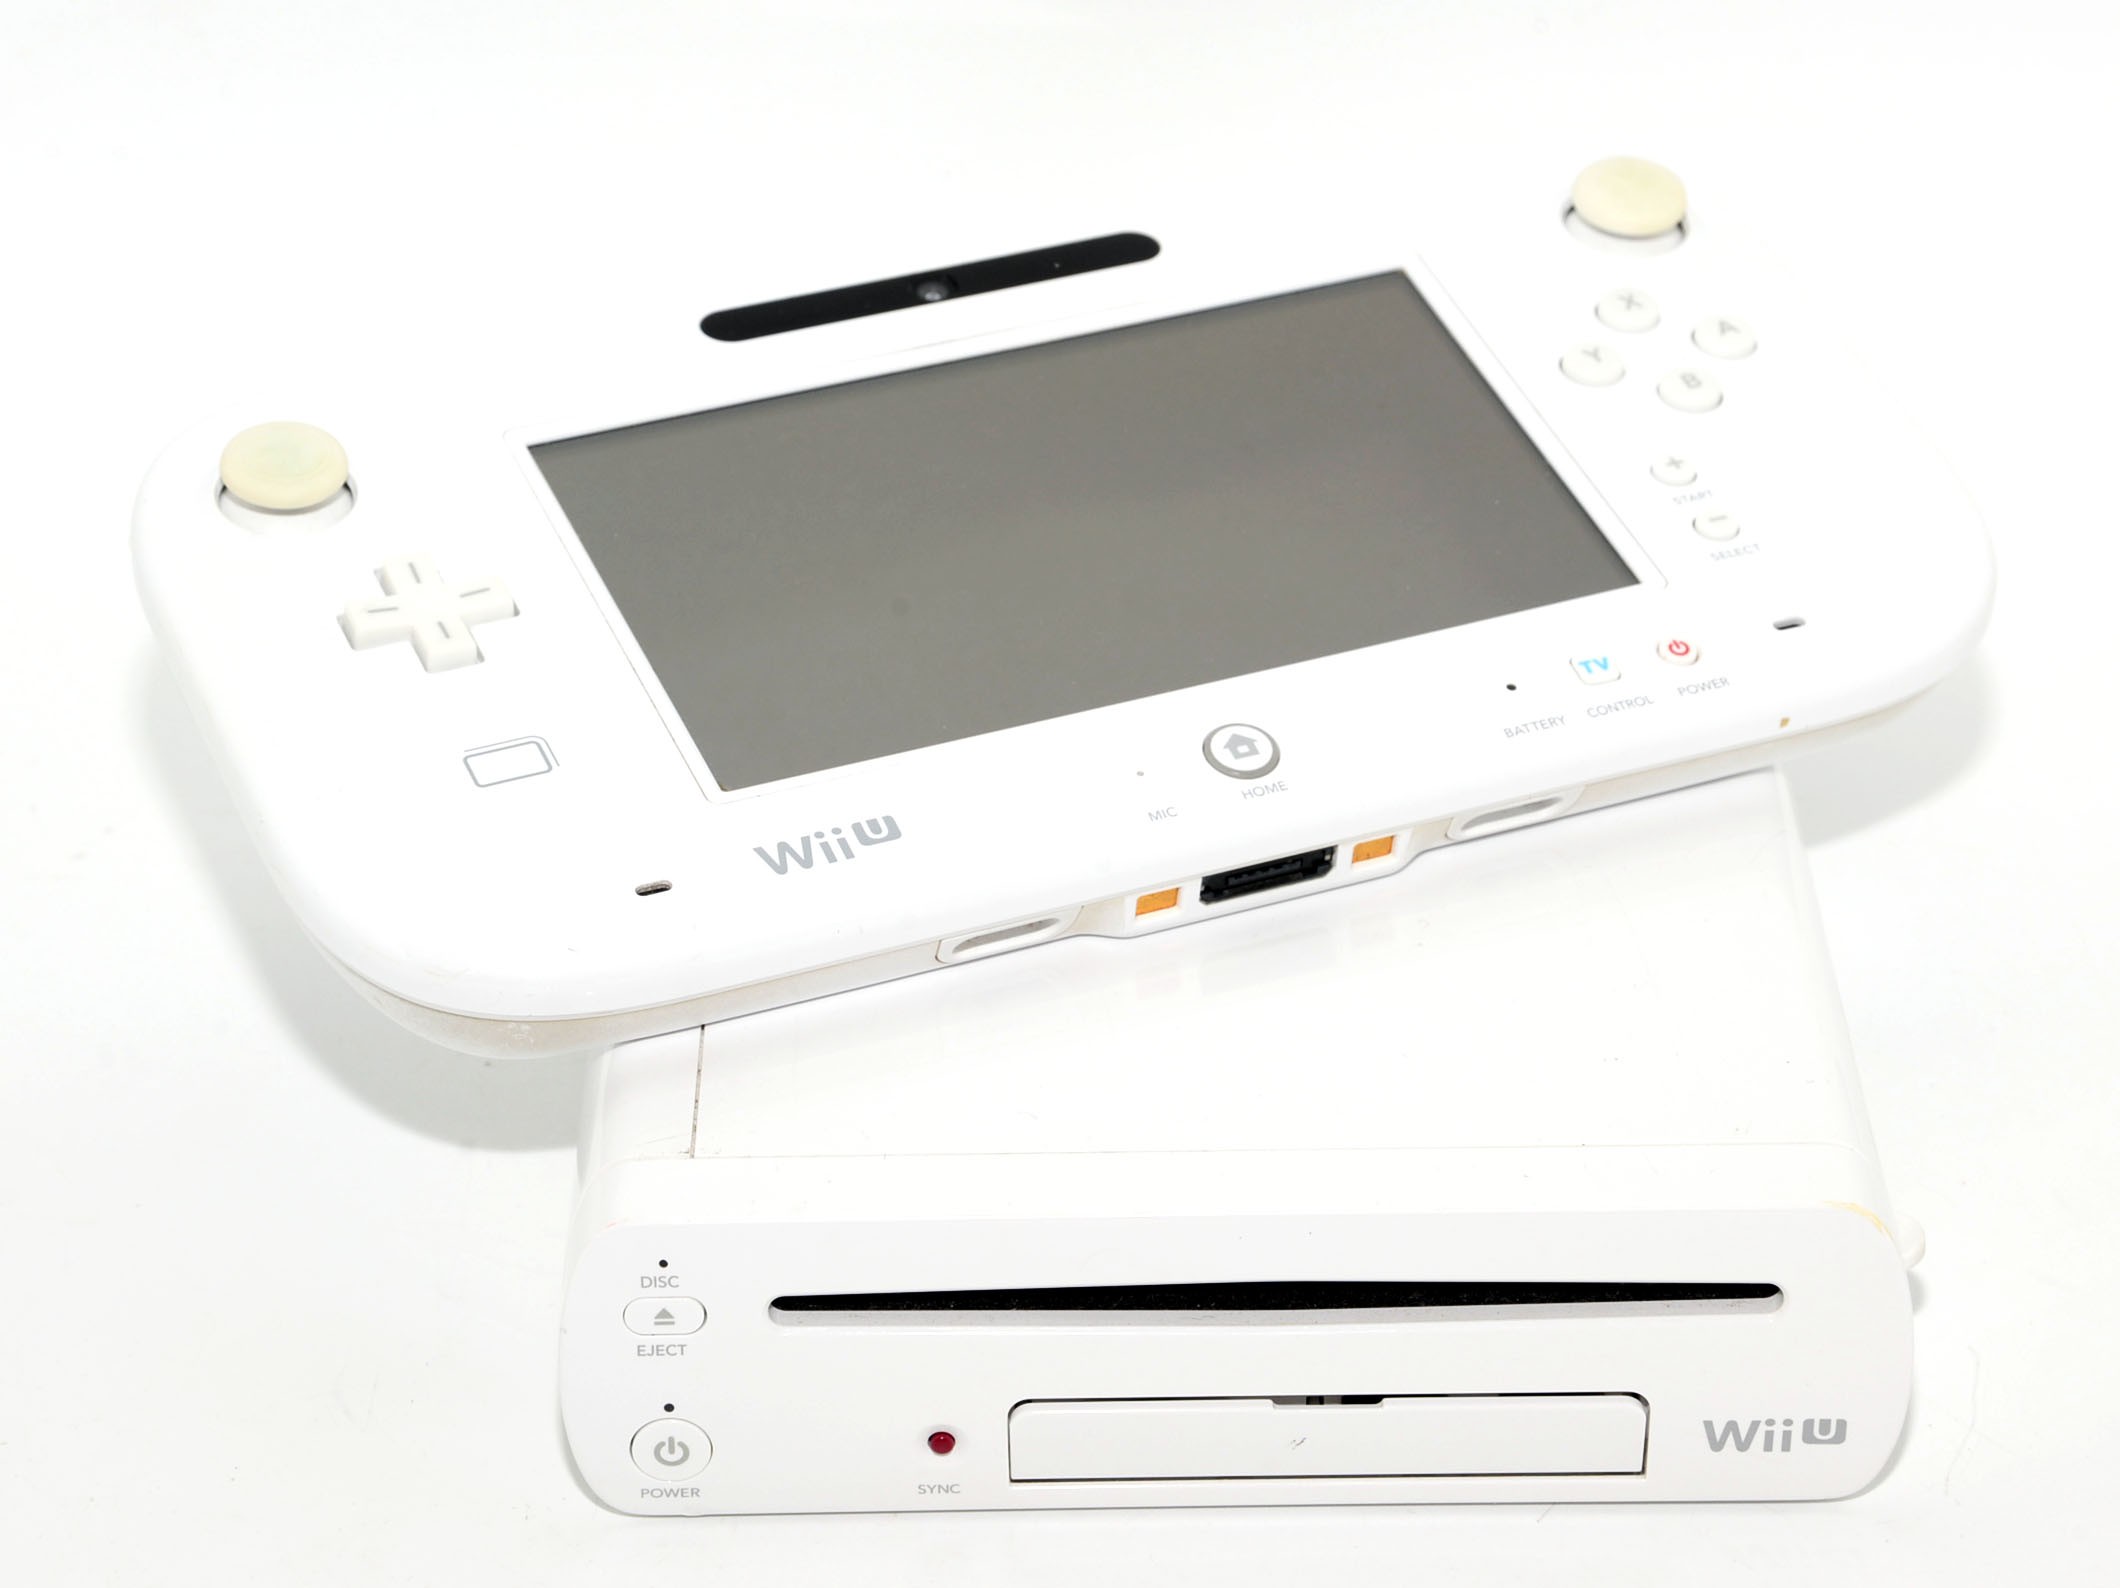 Videoconsola Nintendo Wii U 32GB, Bilbotruke